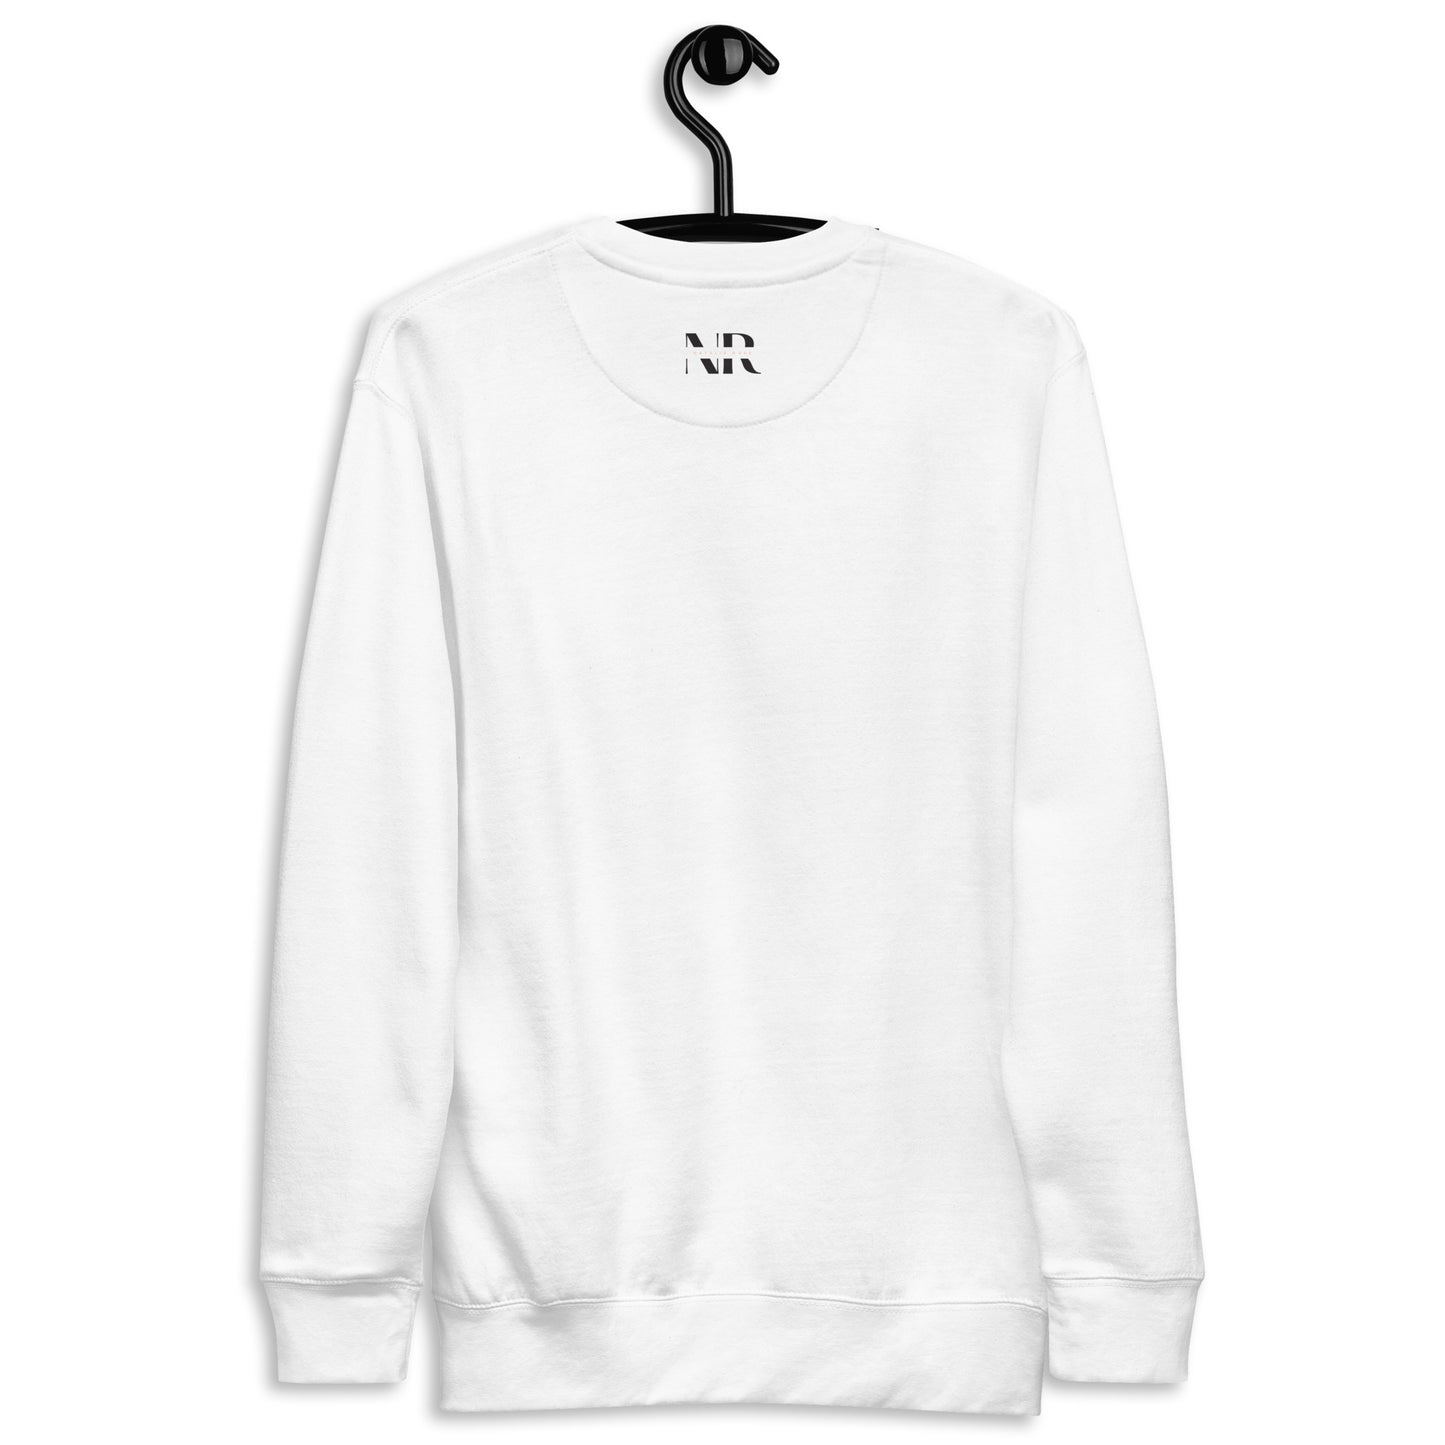 ❤️💜💚 NR Premium Sweatshirt